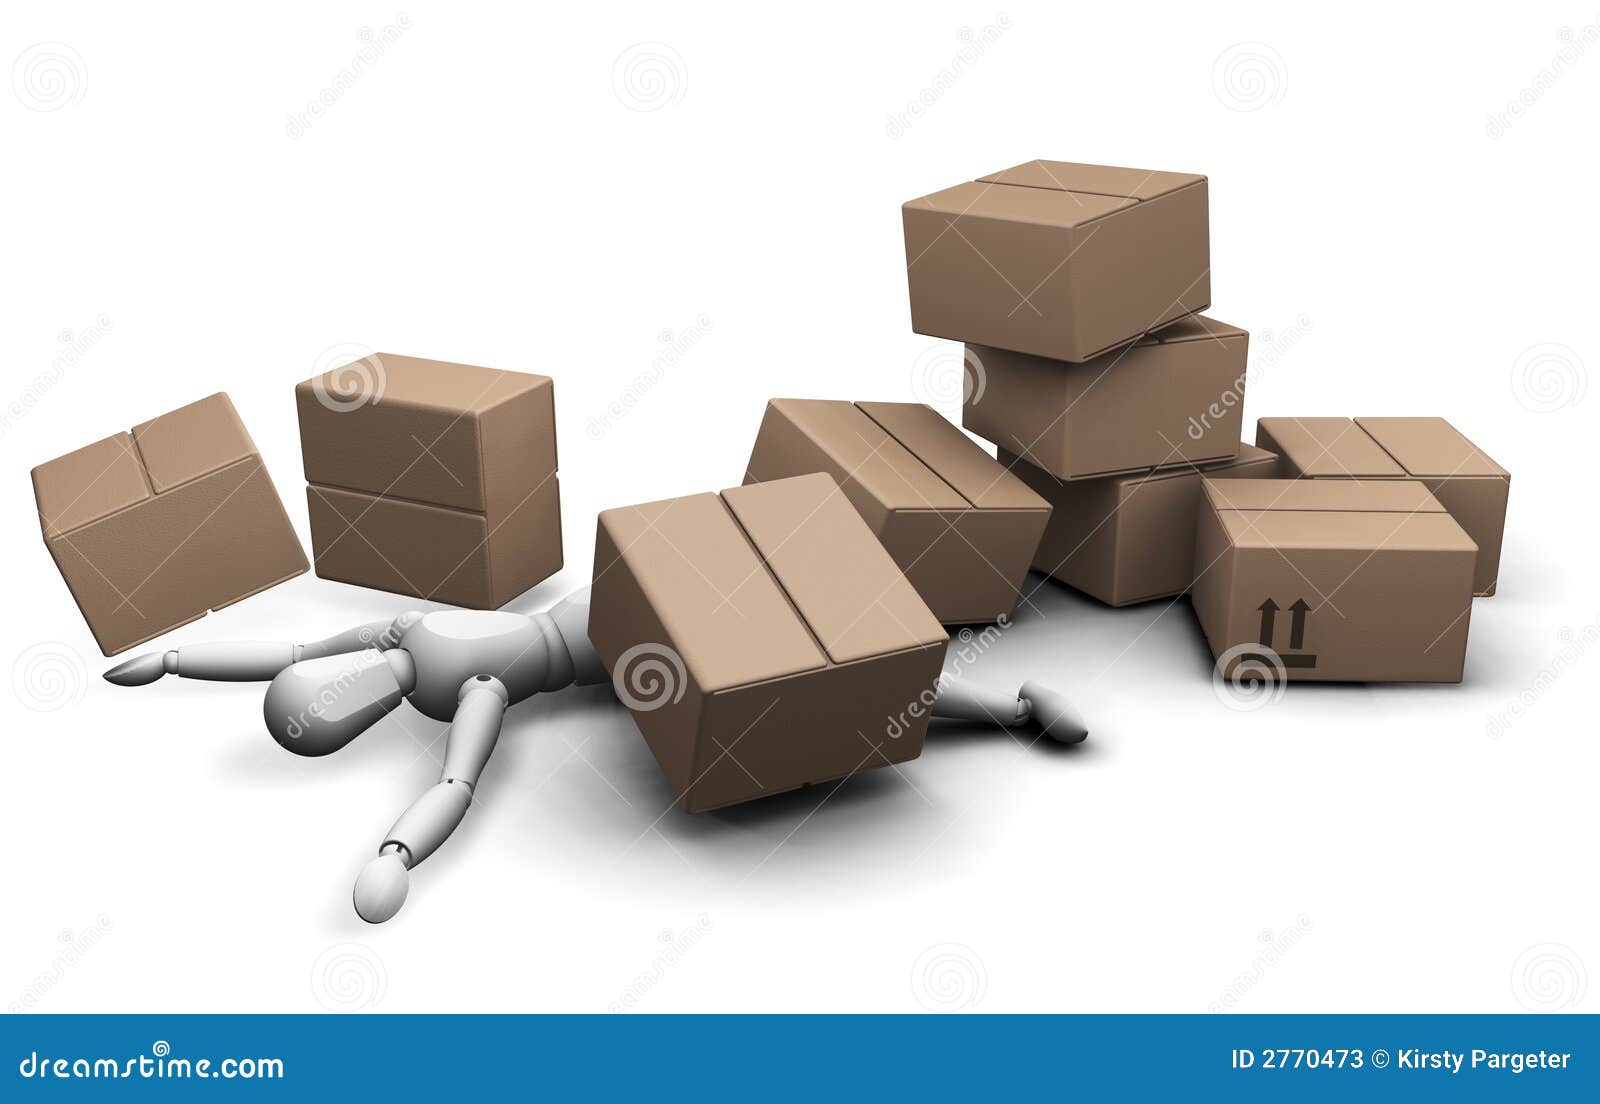 Falling box. Падающие коробки. Упавшая коробка. Человек роняет коробку. Выронил коробки.